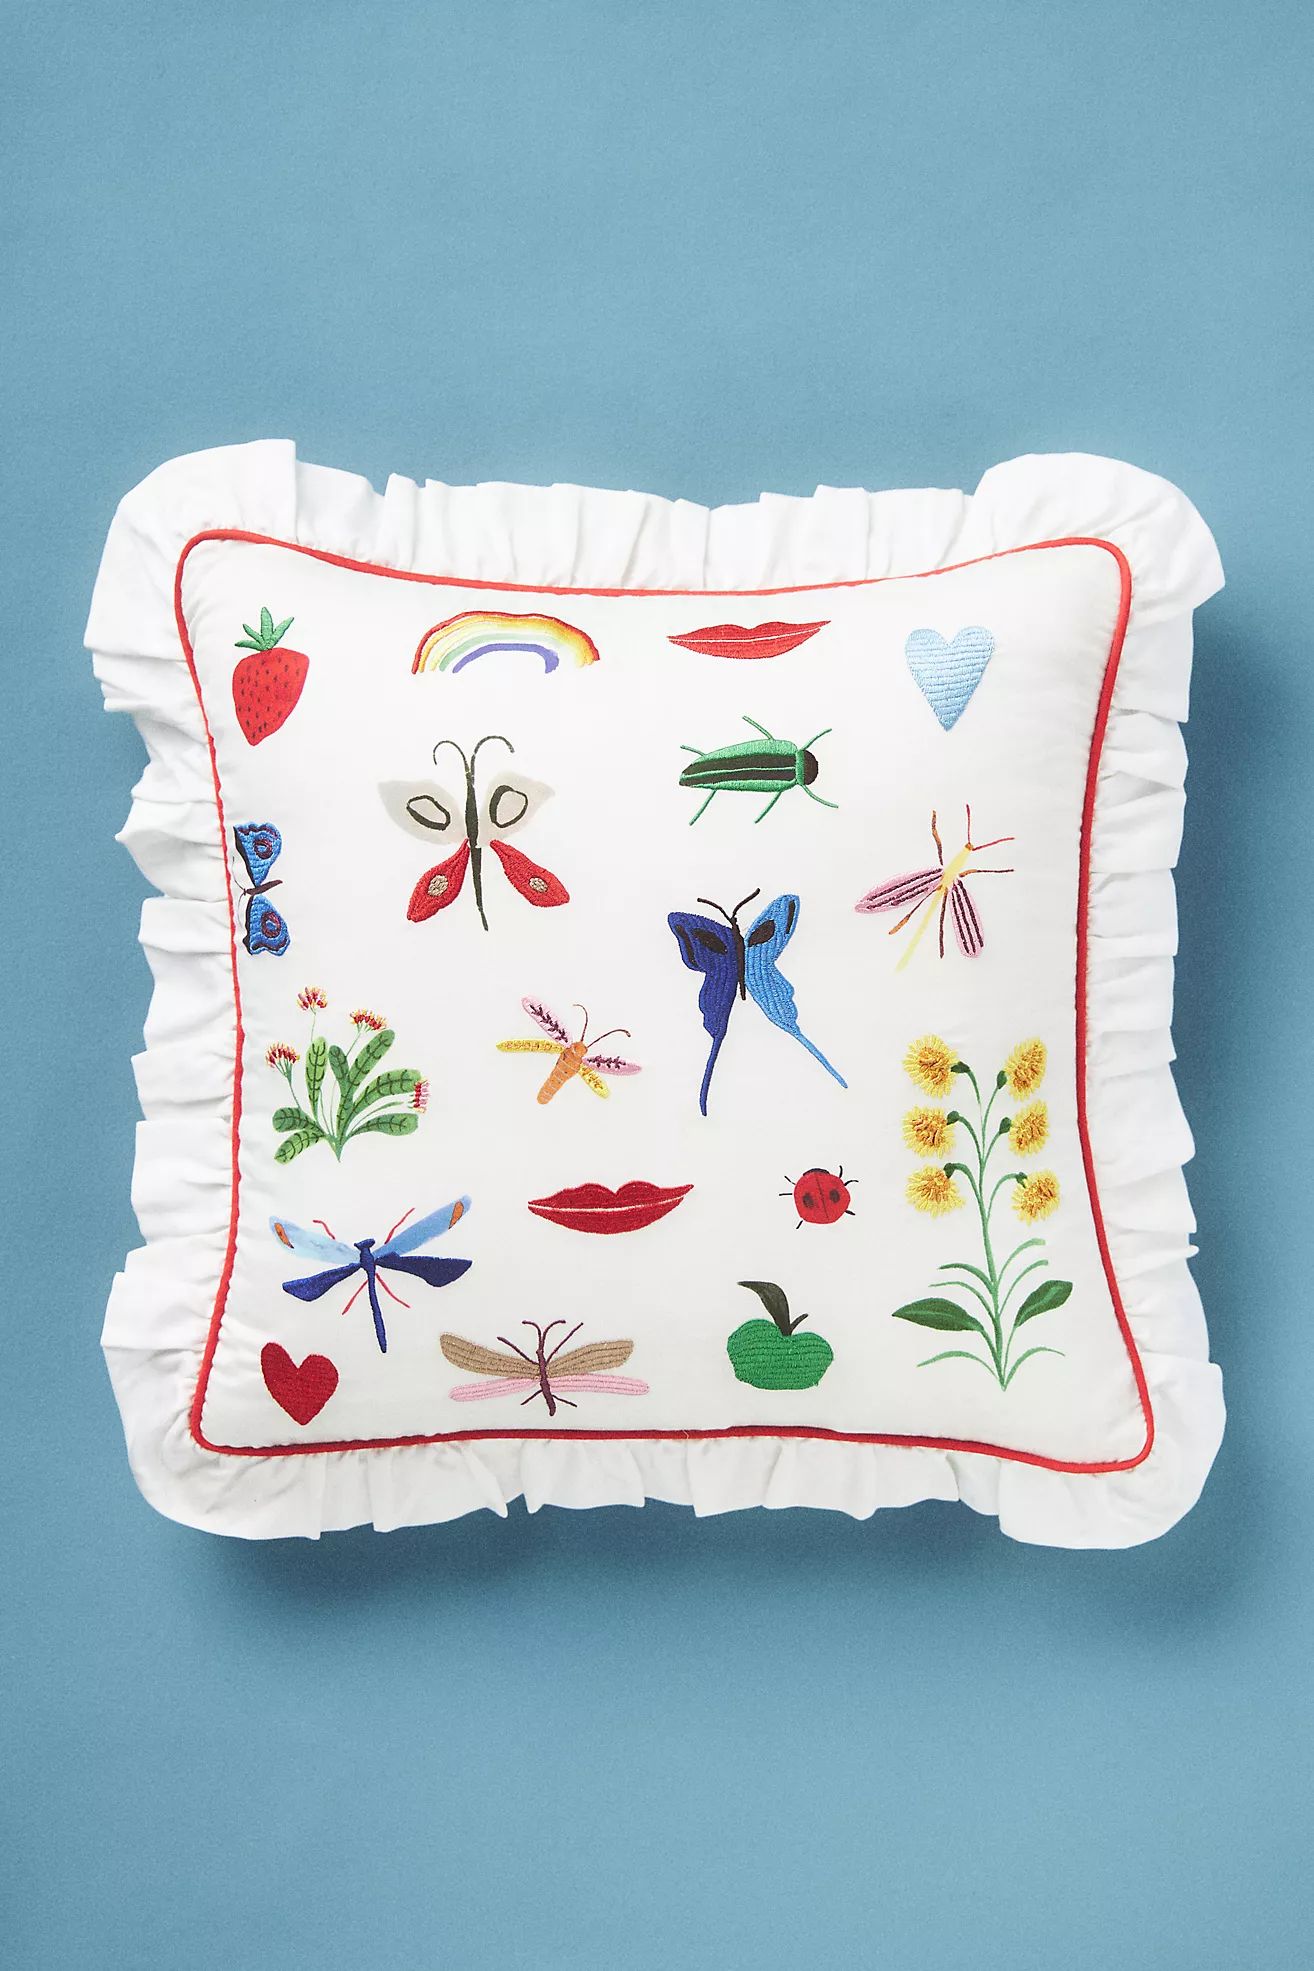 Pernille Rosenkilde Embroidered Pillow | Anthropologie (US)